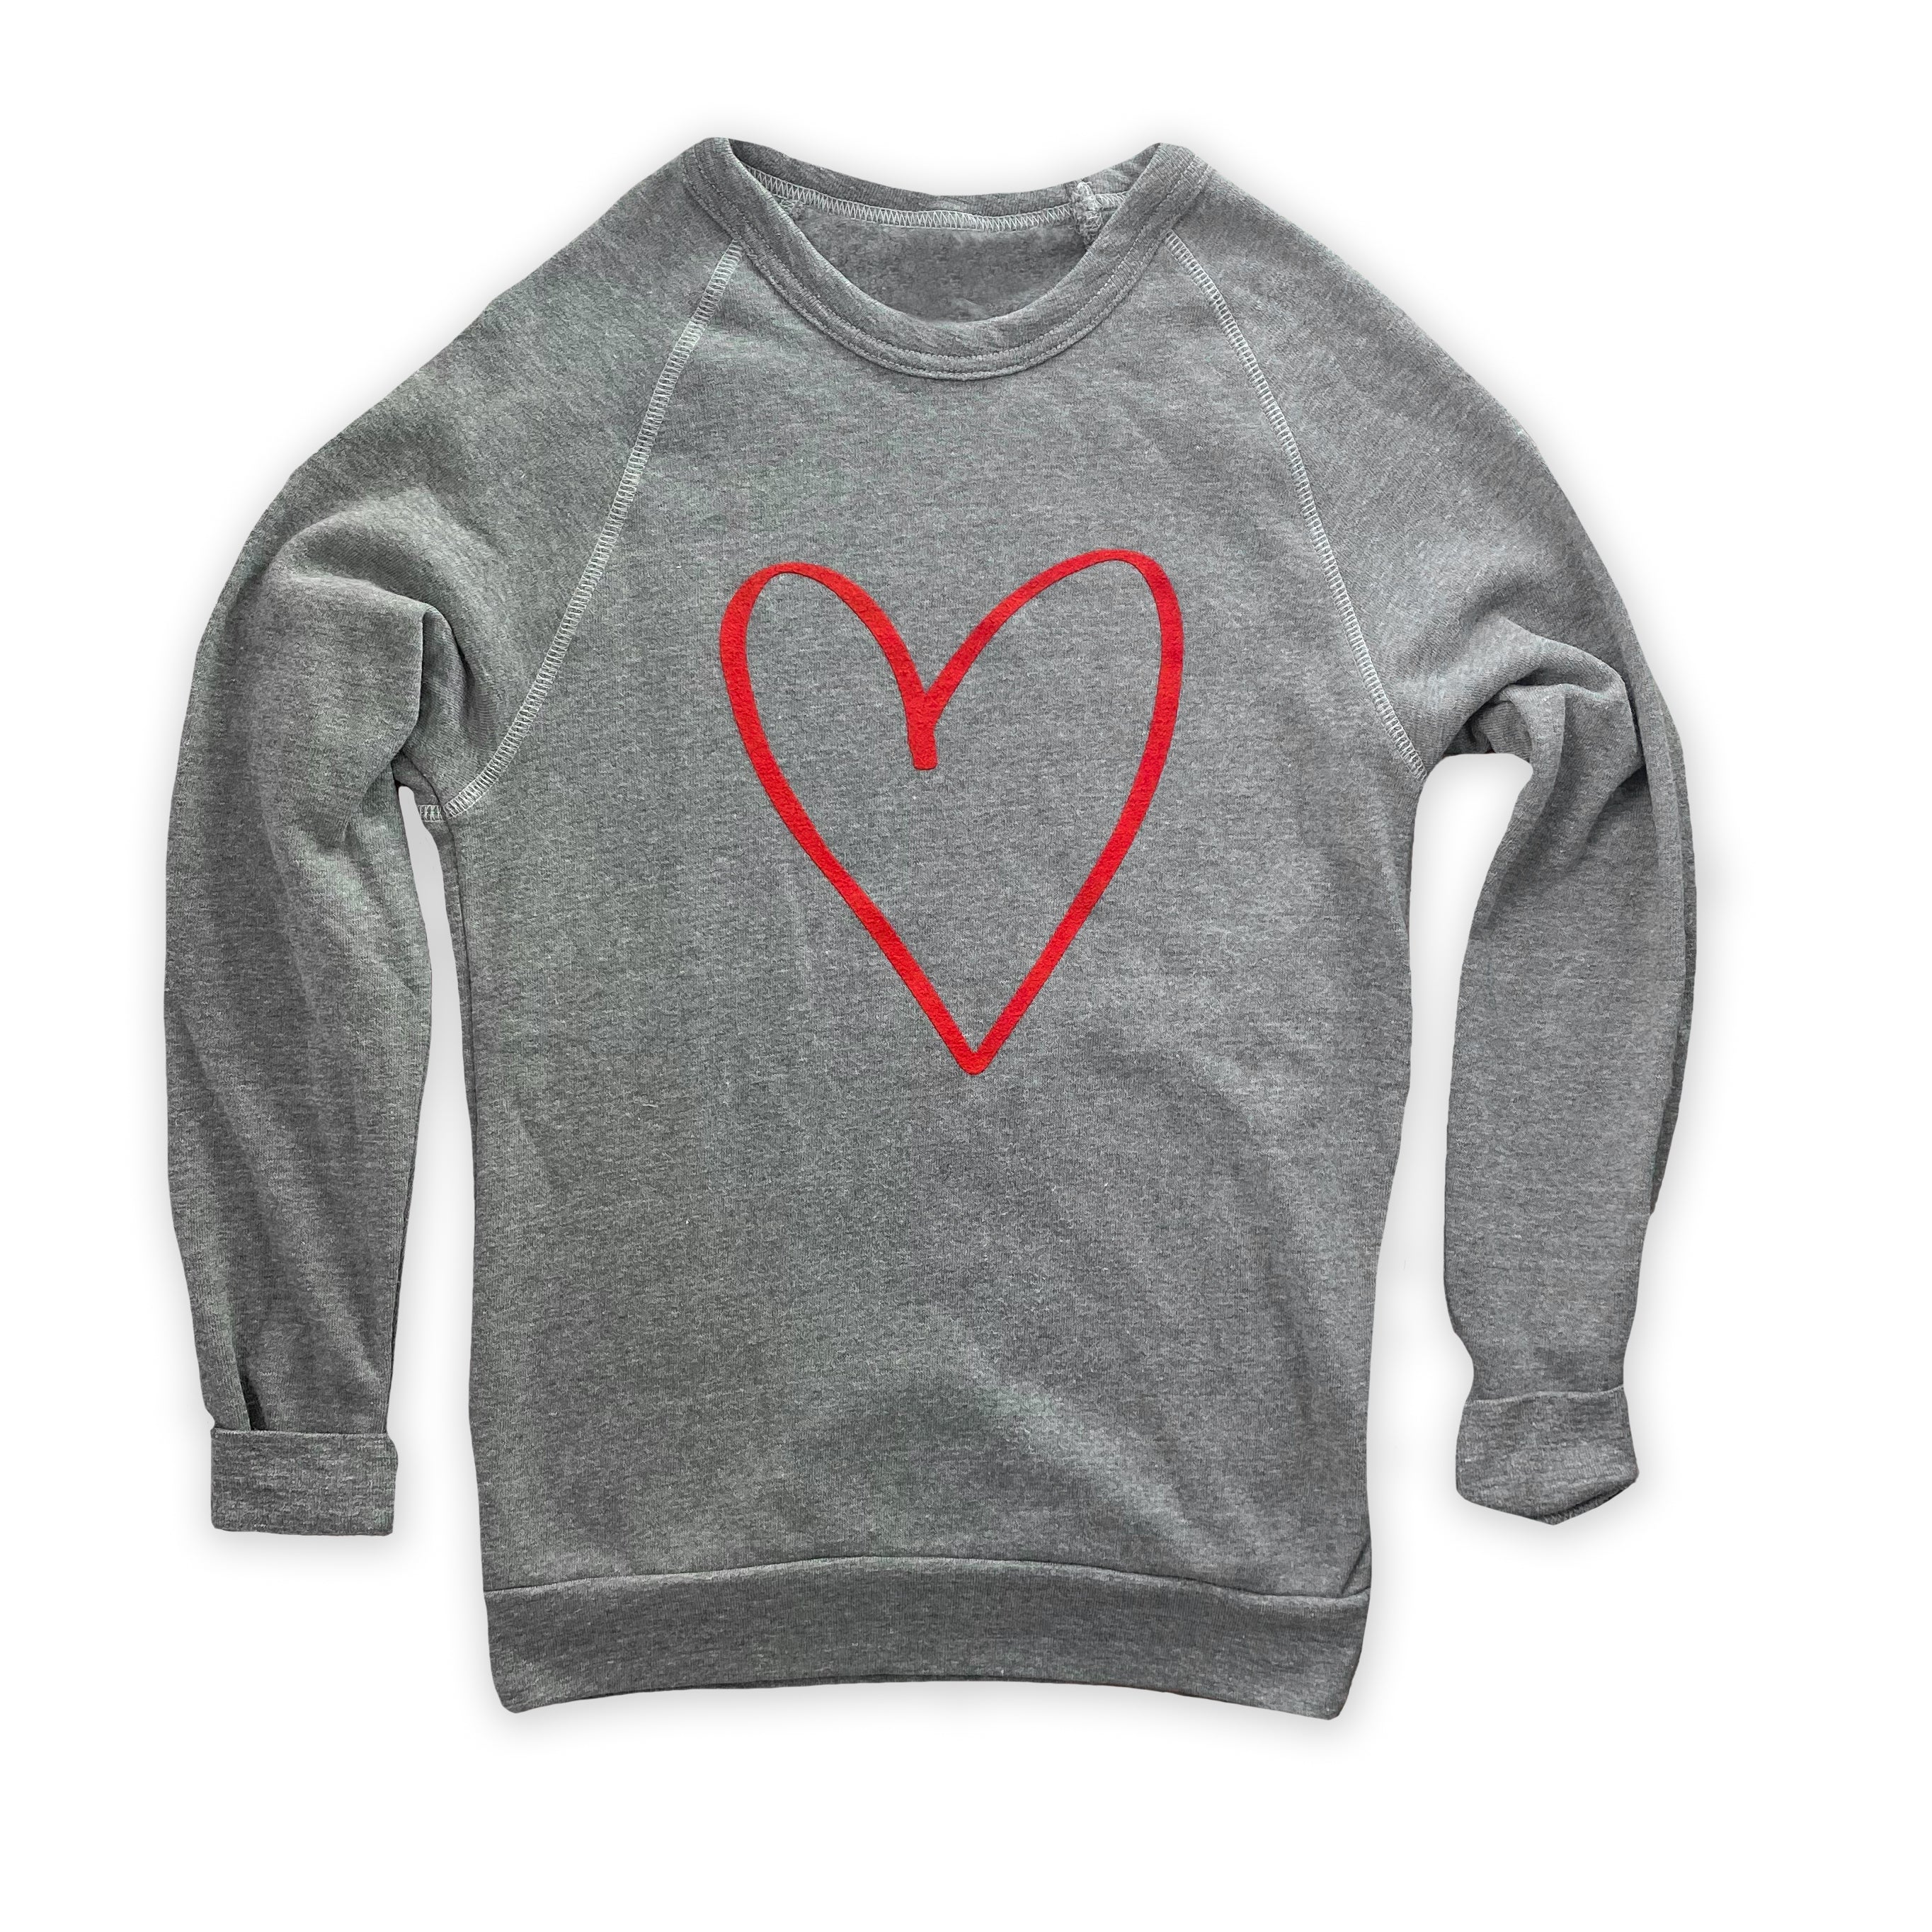 ON SALE - Show Some Love Heart sweatshirt (Discount shown in cart